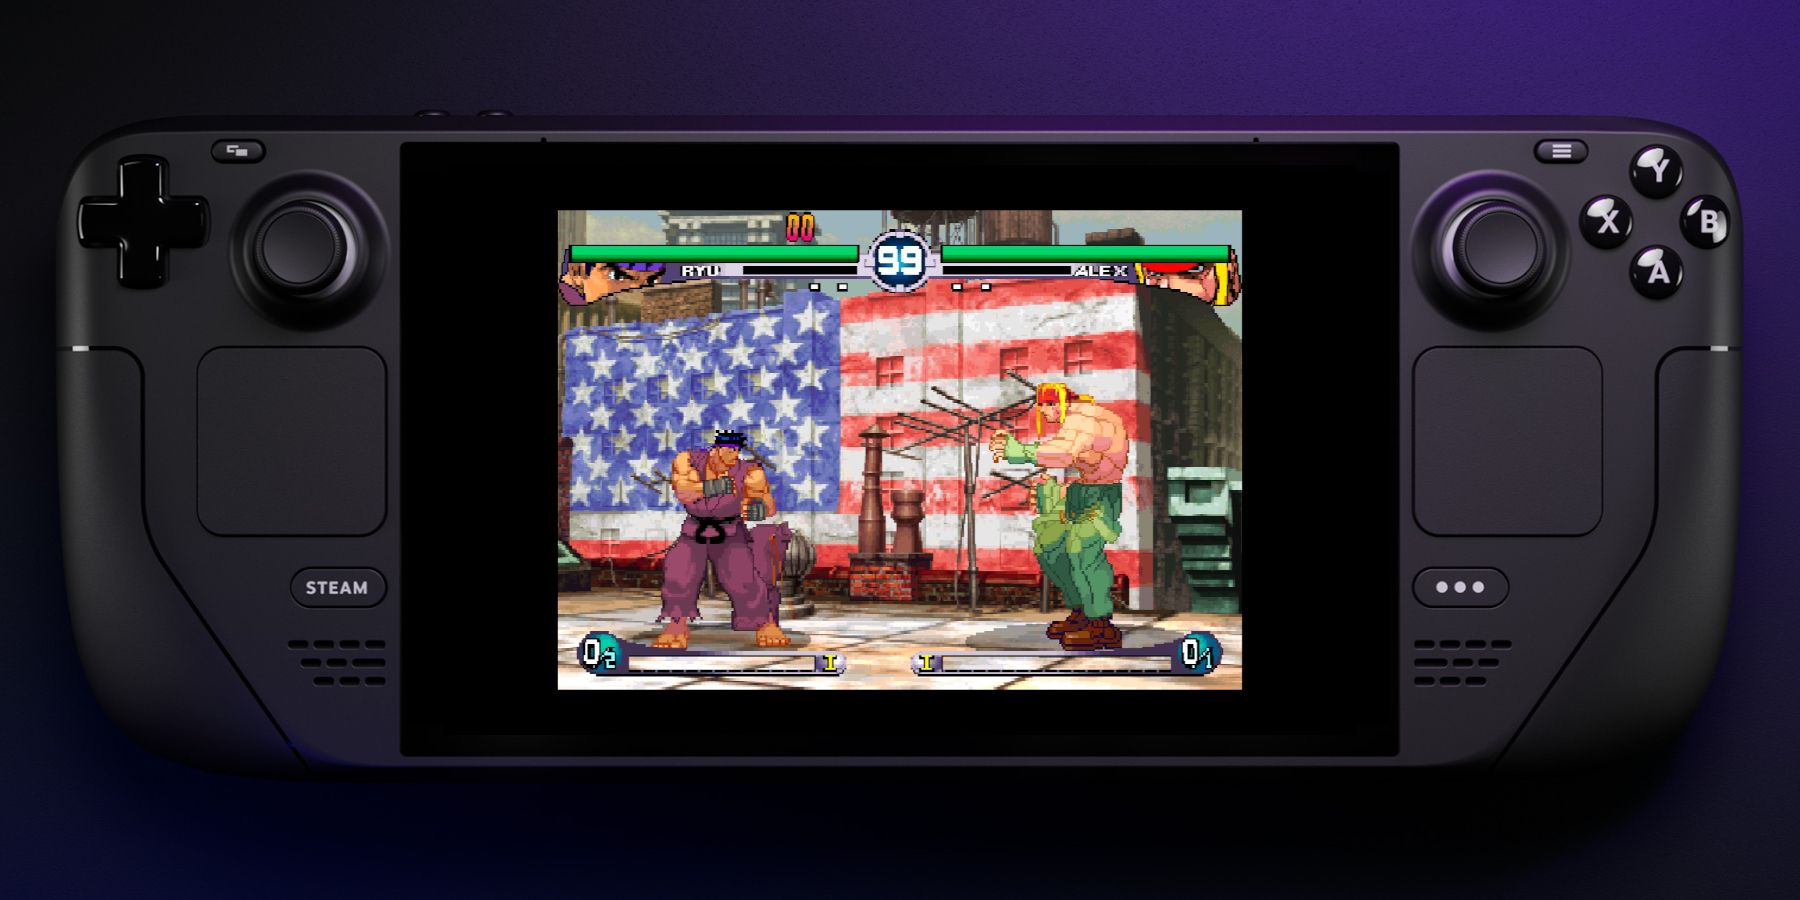 Dreamcast version of Street Fighter 3 on Steam Deck